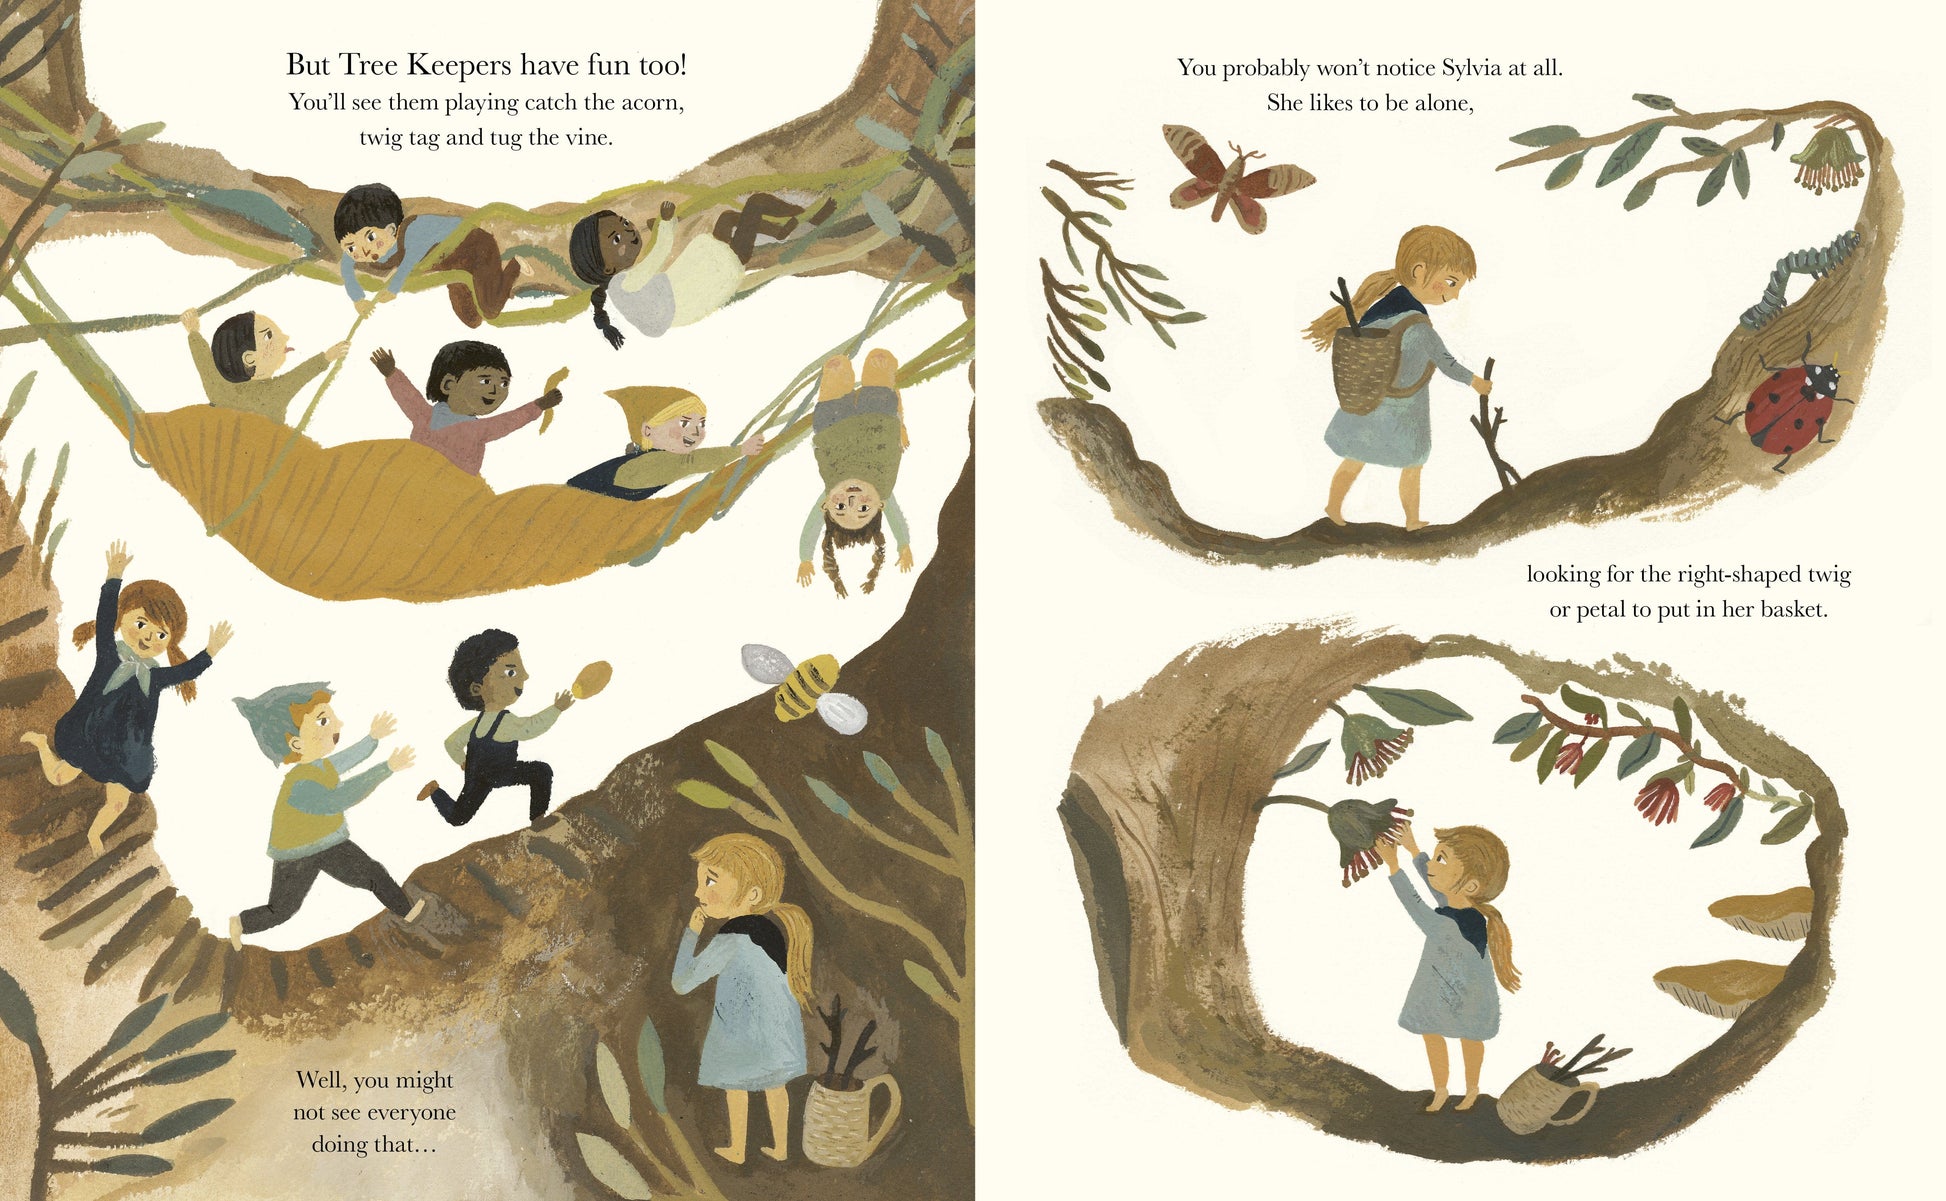 Book Bag Doha  The Tree Keepers: Flock By Gemma Koomen (Hardcover)